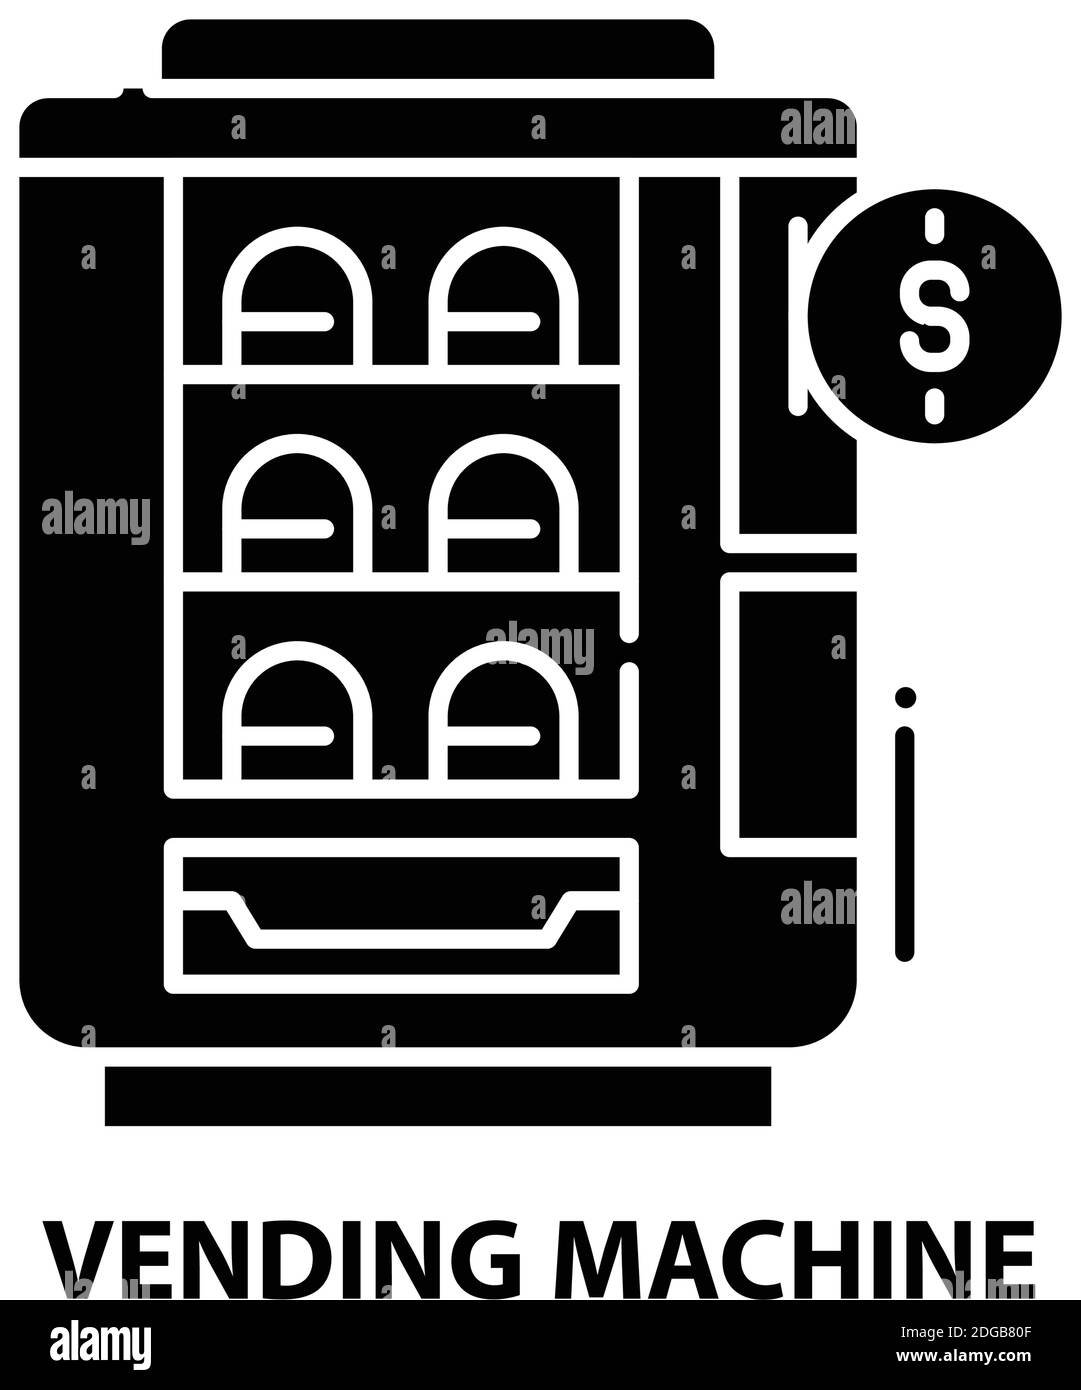 vending machine icon, black vector sign with editable strokes, concept illustration Stock Vector